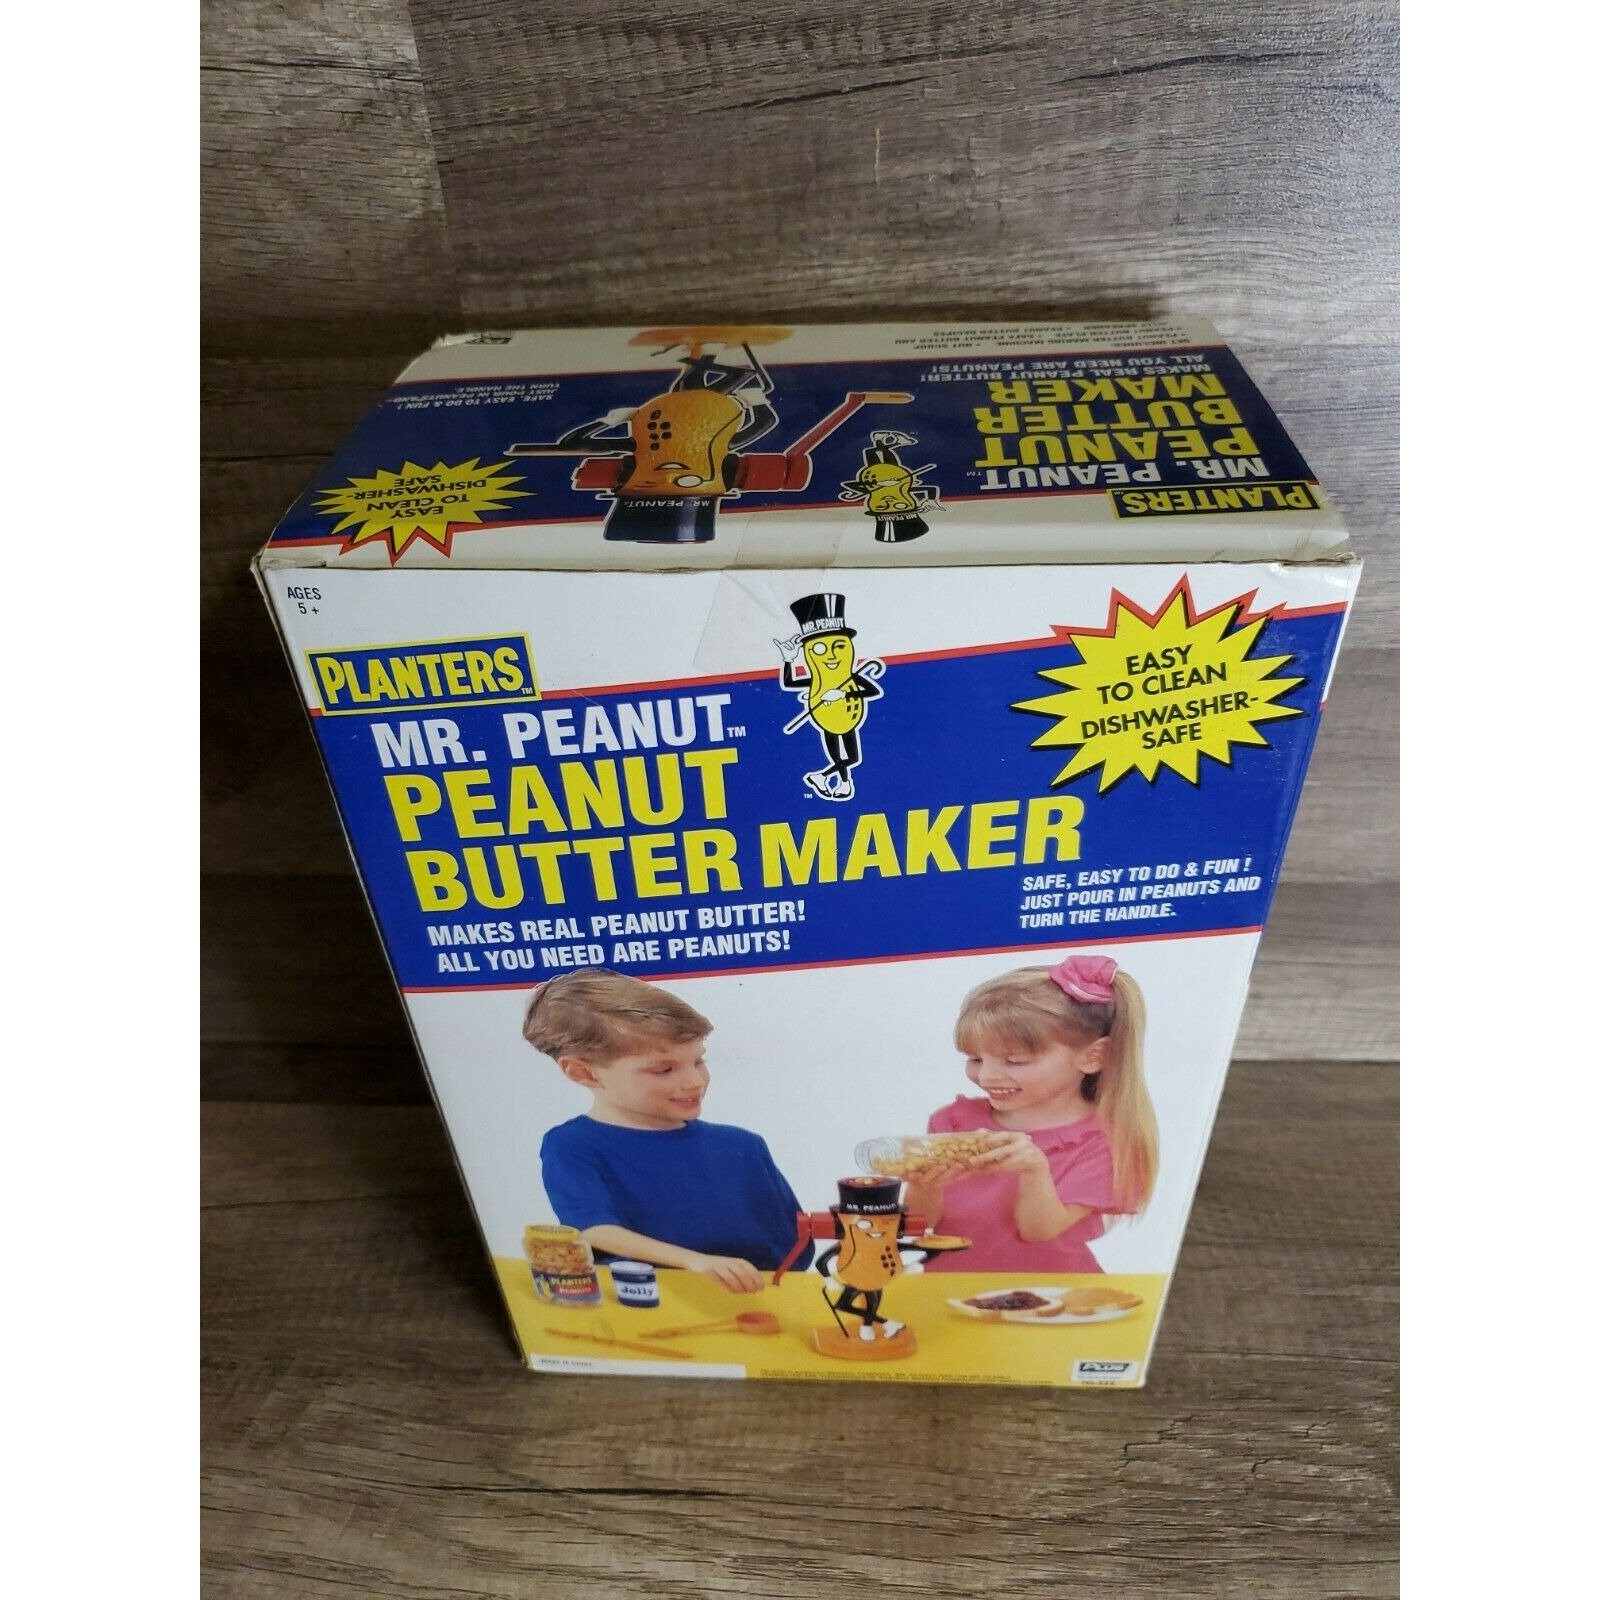 Mr. Peanut Butter Maker - Staintons